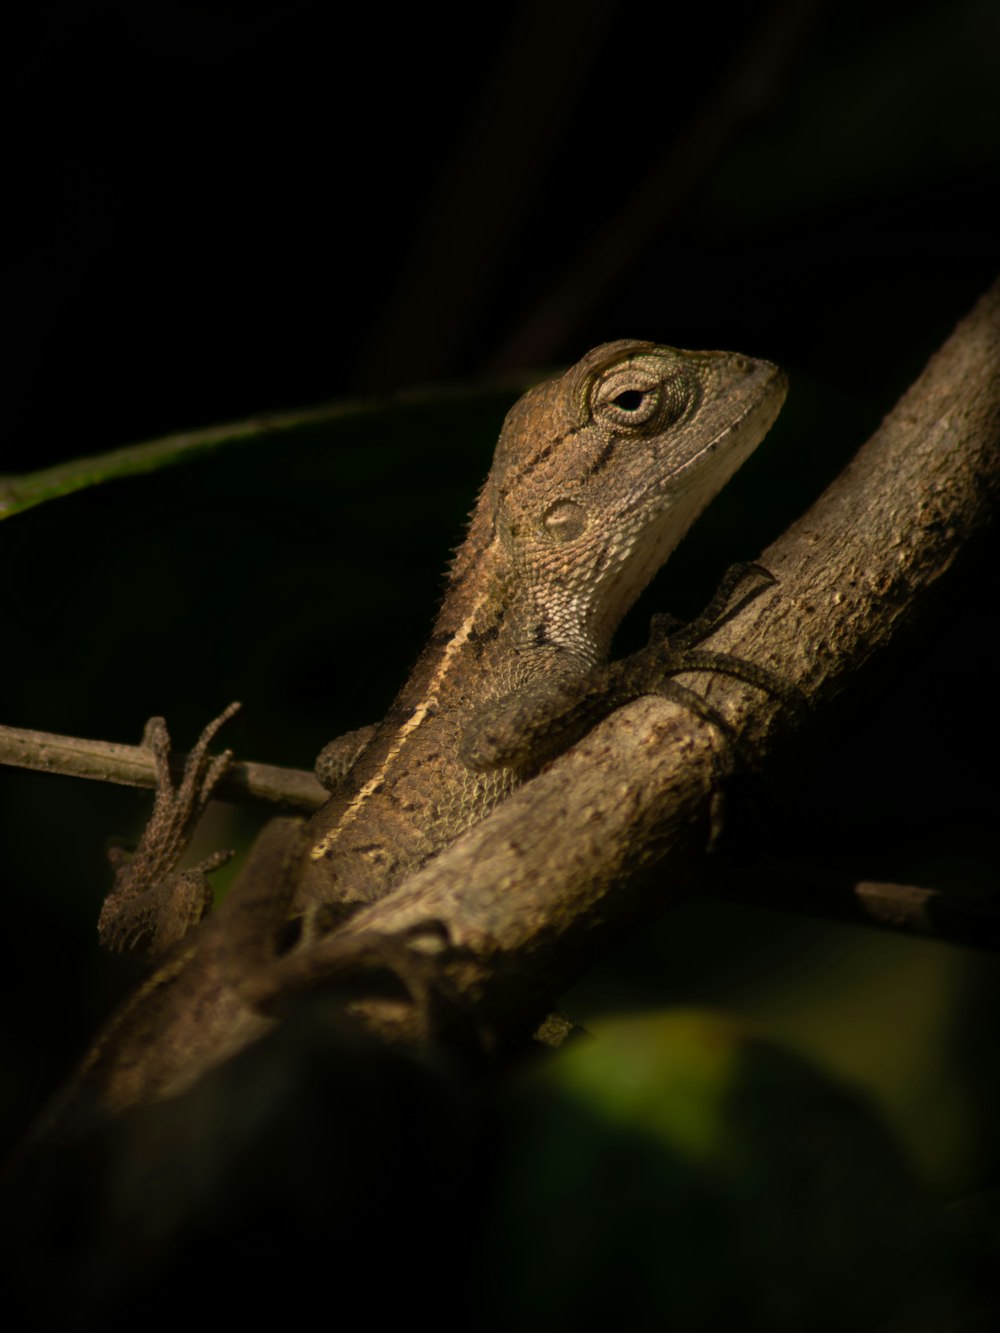 a lizard is sitting on a tree branch